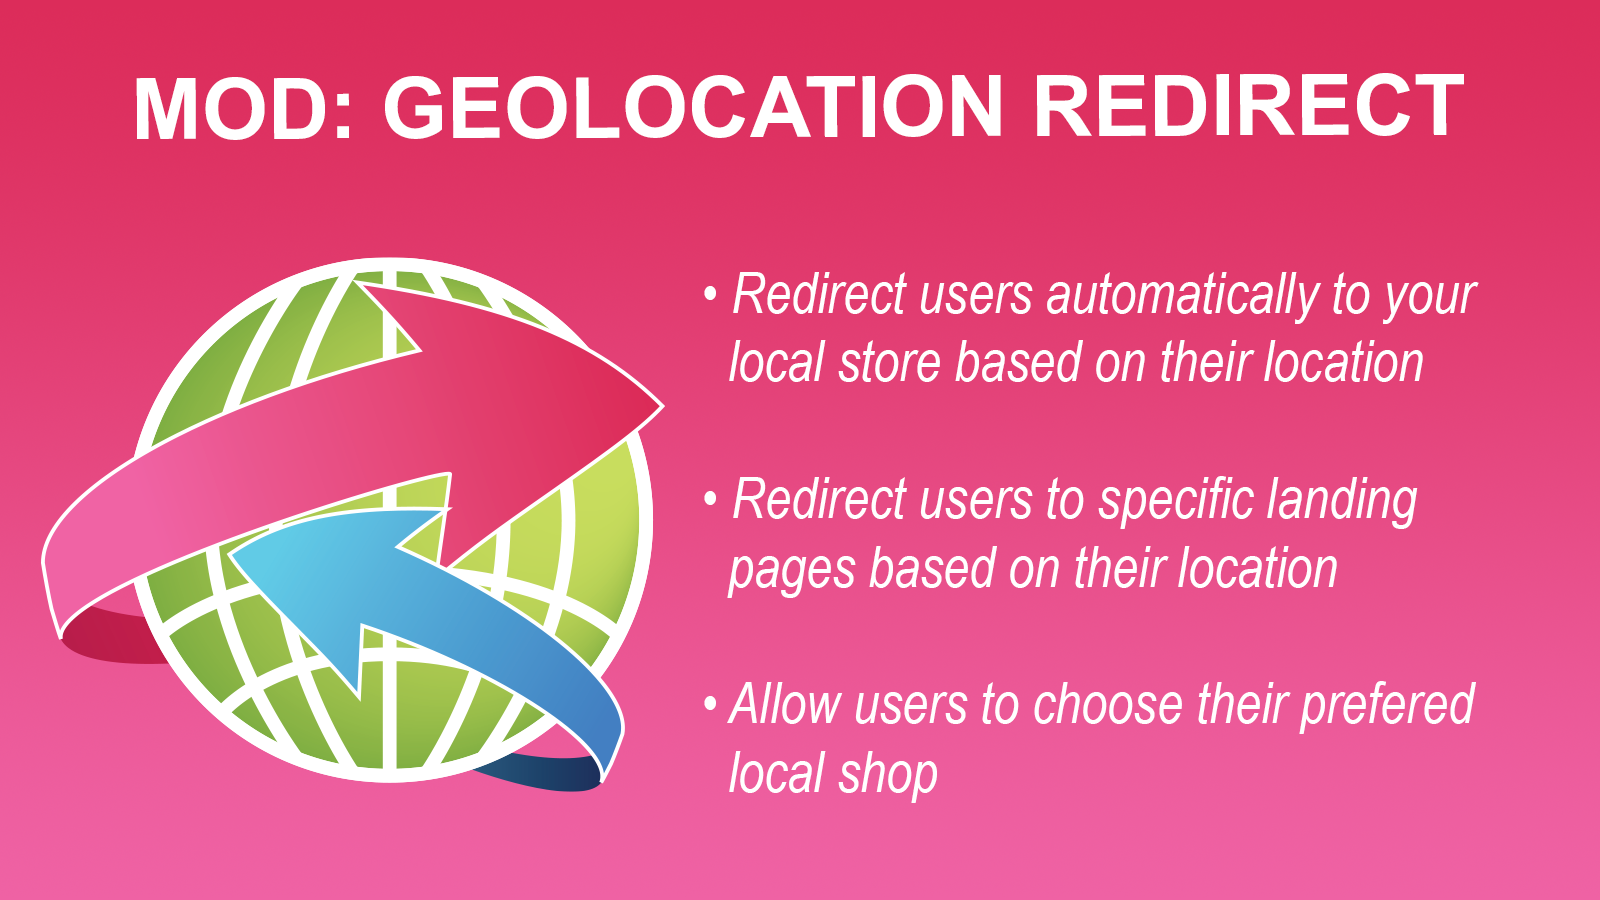 MOD- Geolocation Redirect